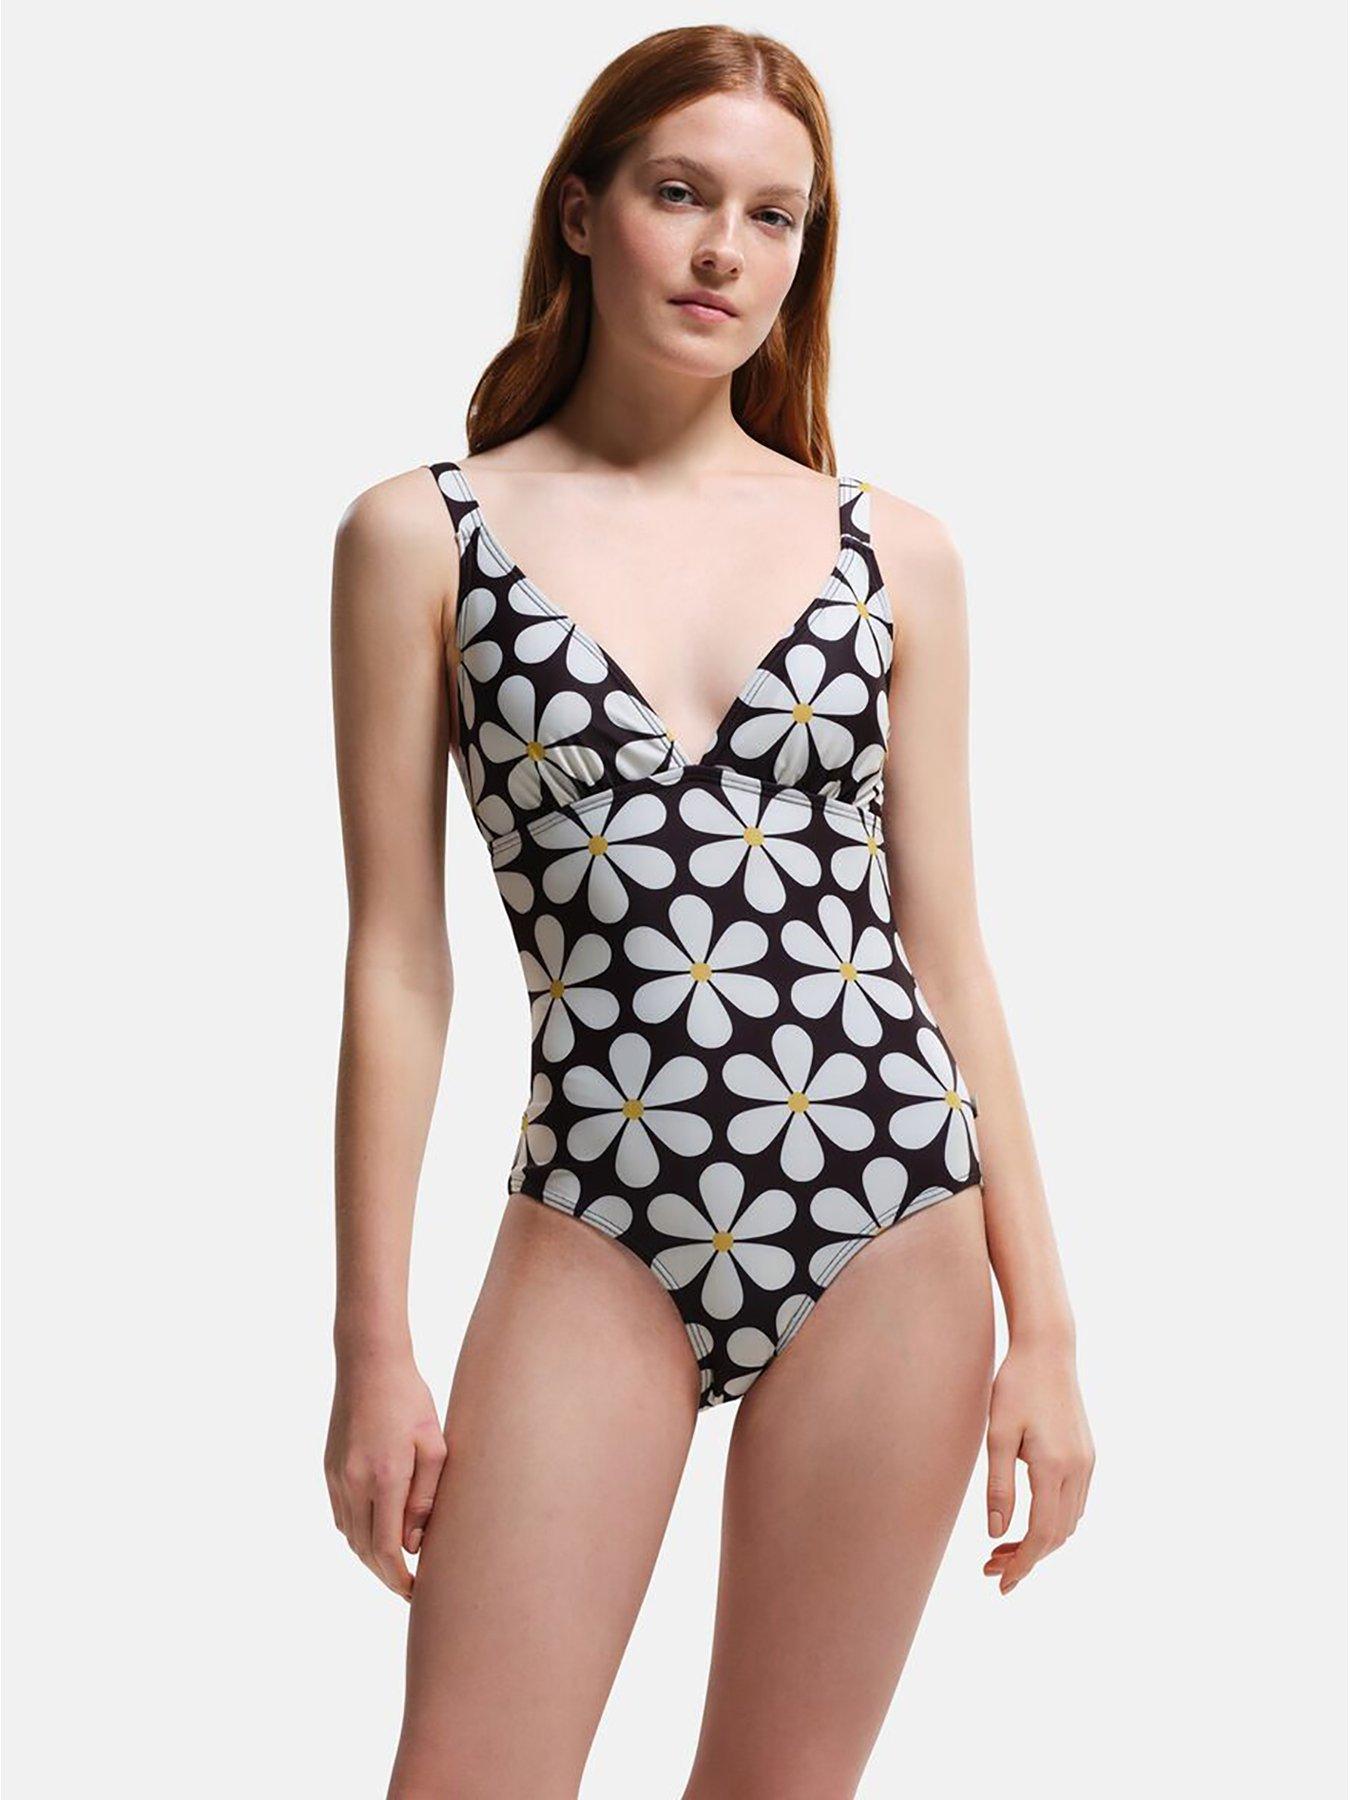 Energy Chlorine Resistant Swimsuit - Floral/Black